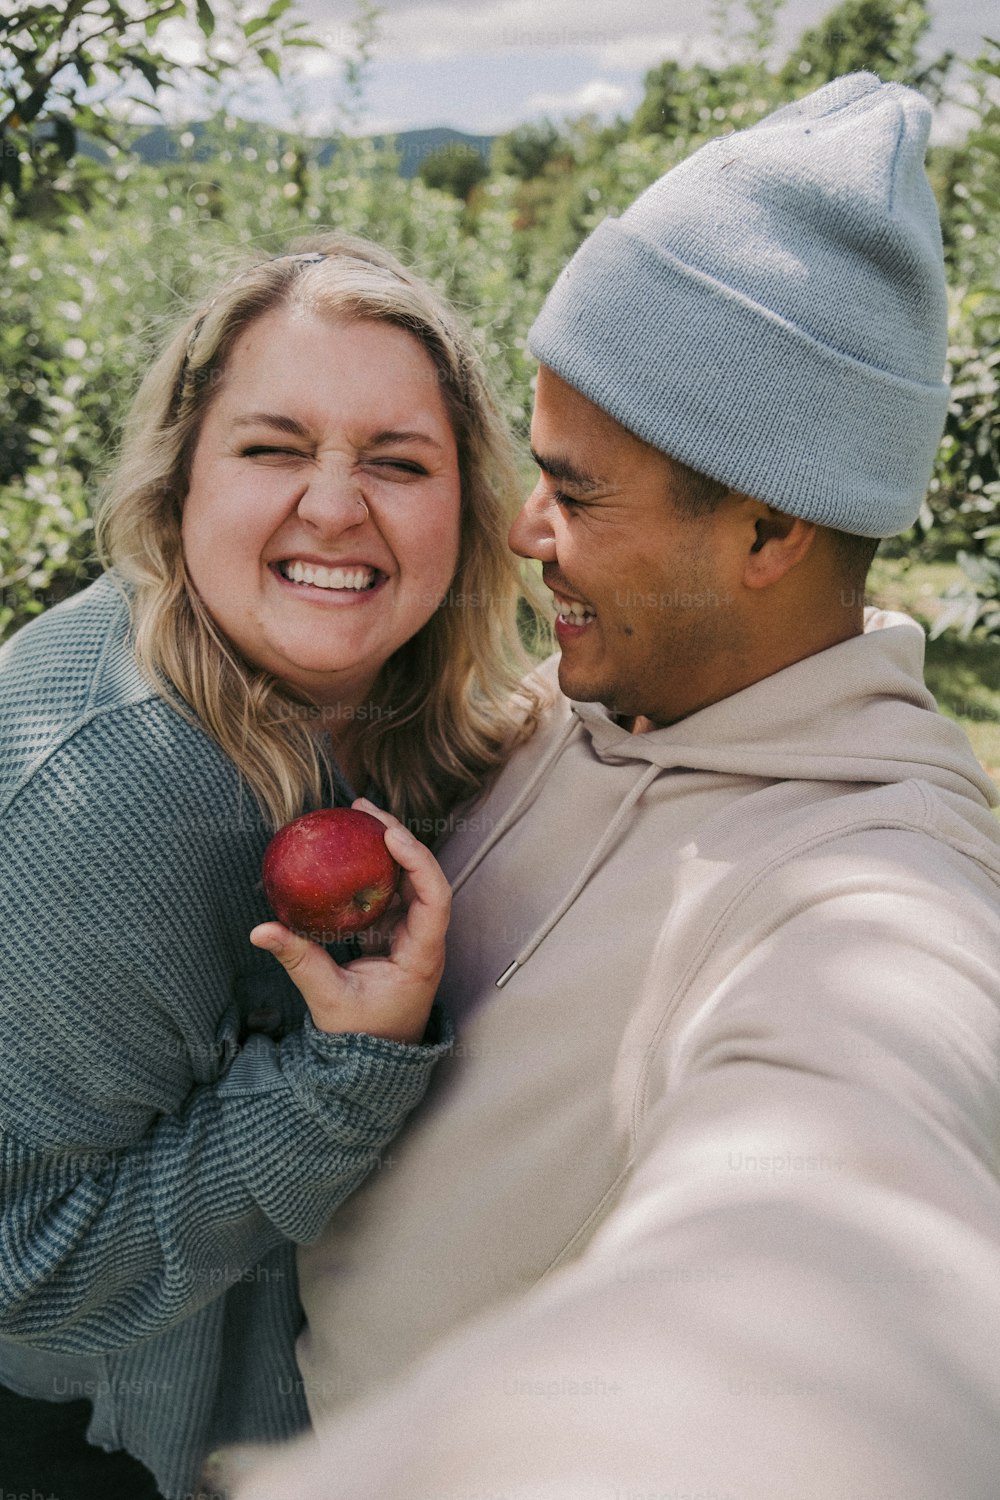 Un uomo e una donna sorridono mentre tengono in mano una mela